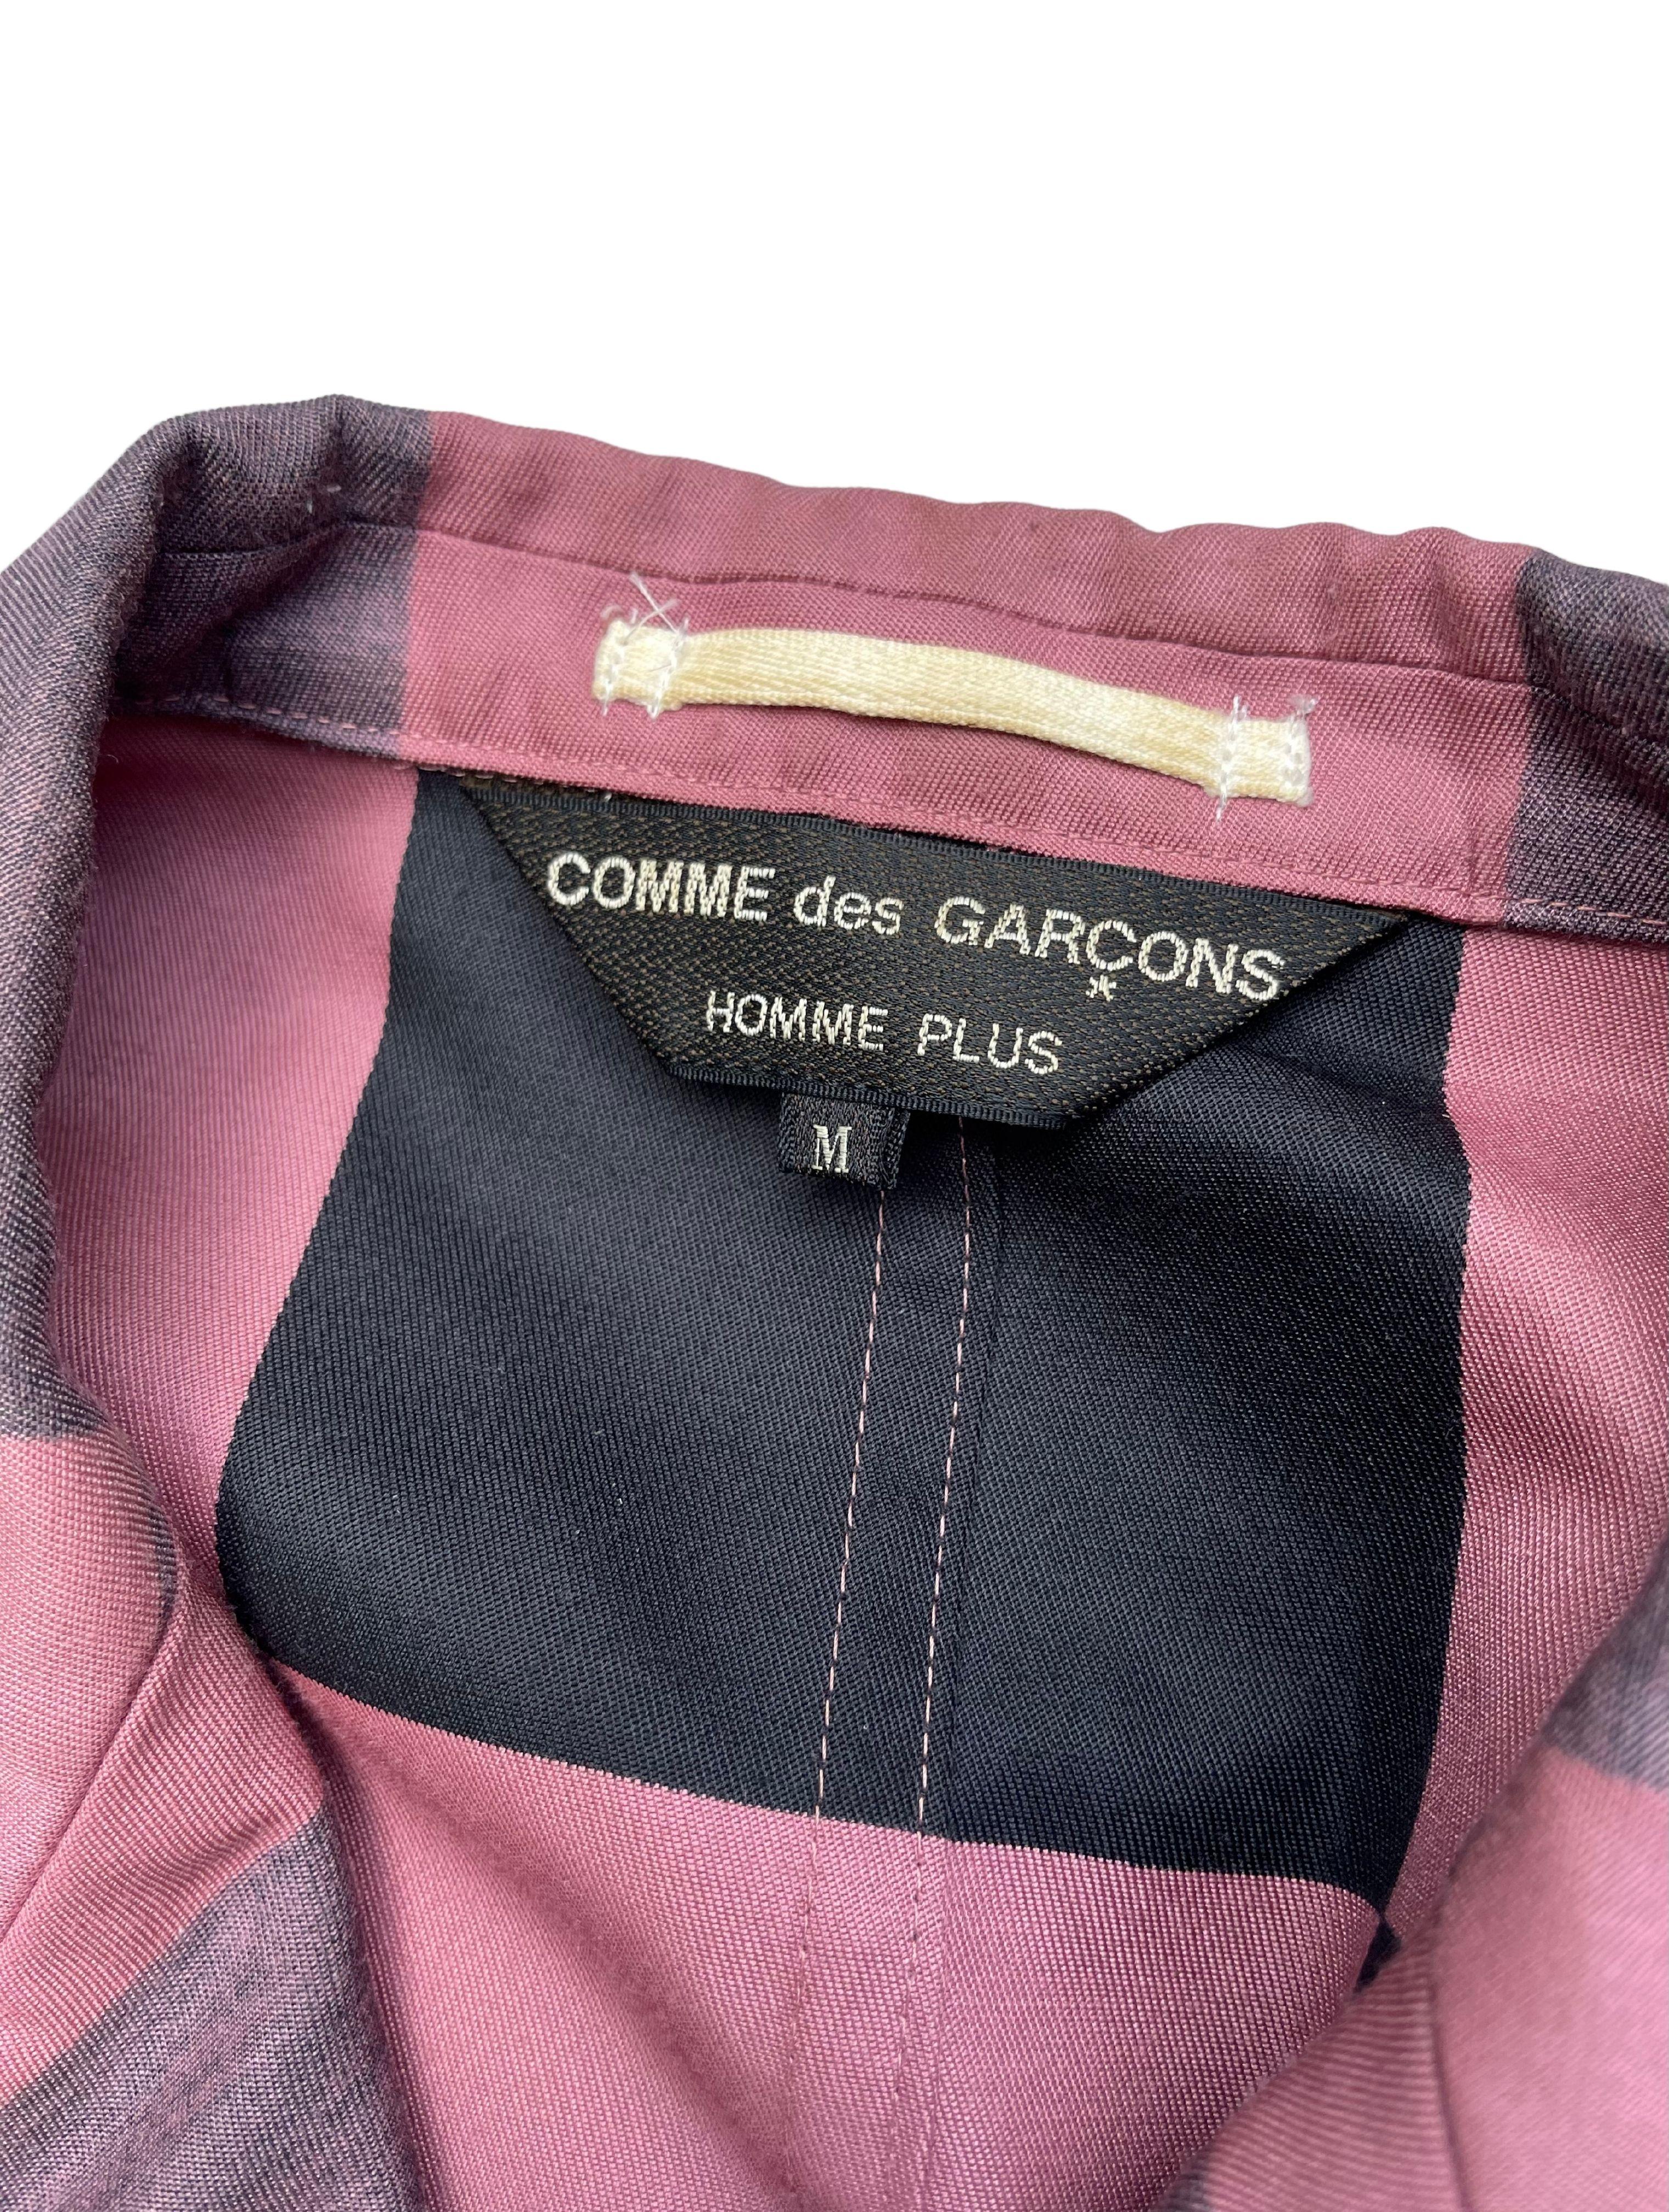 COMME des GARCONS Homme Plus Checkered Suit, Spring Summer 2002, size M. 1